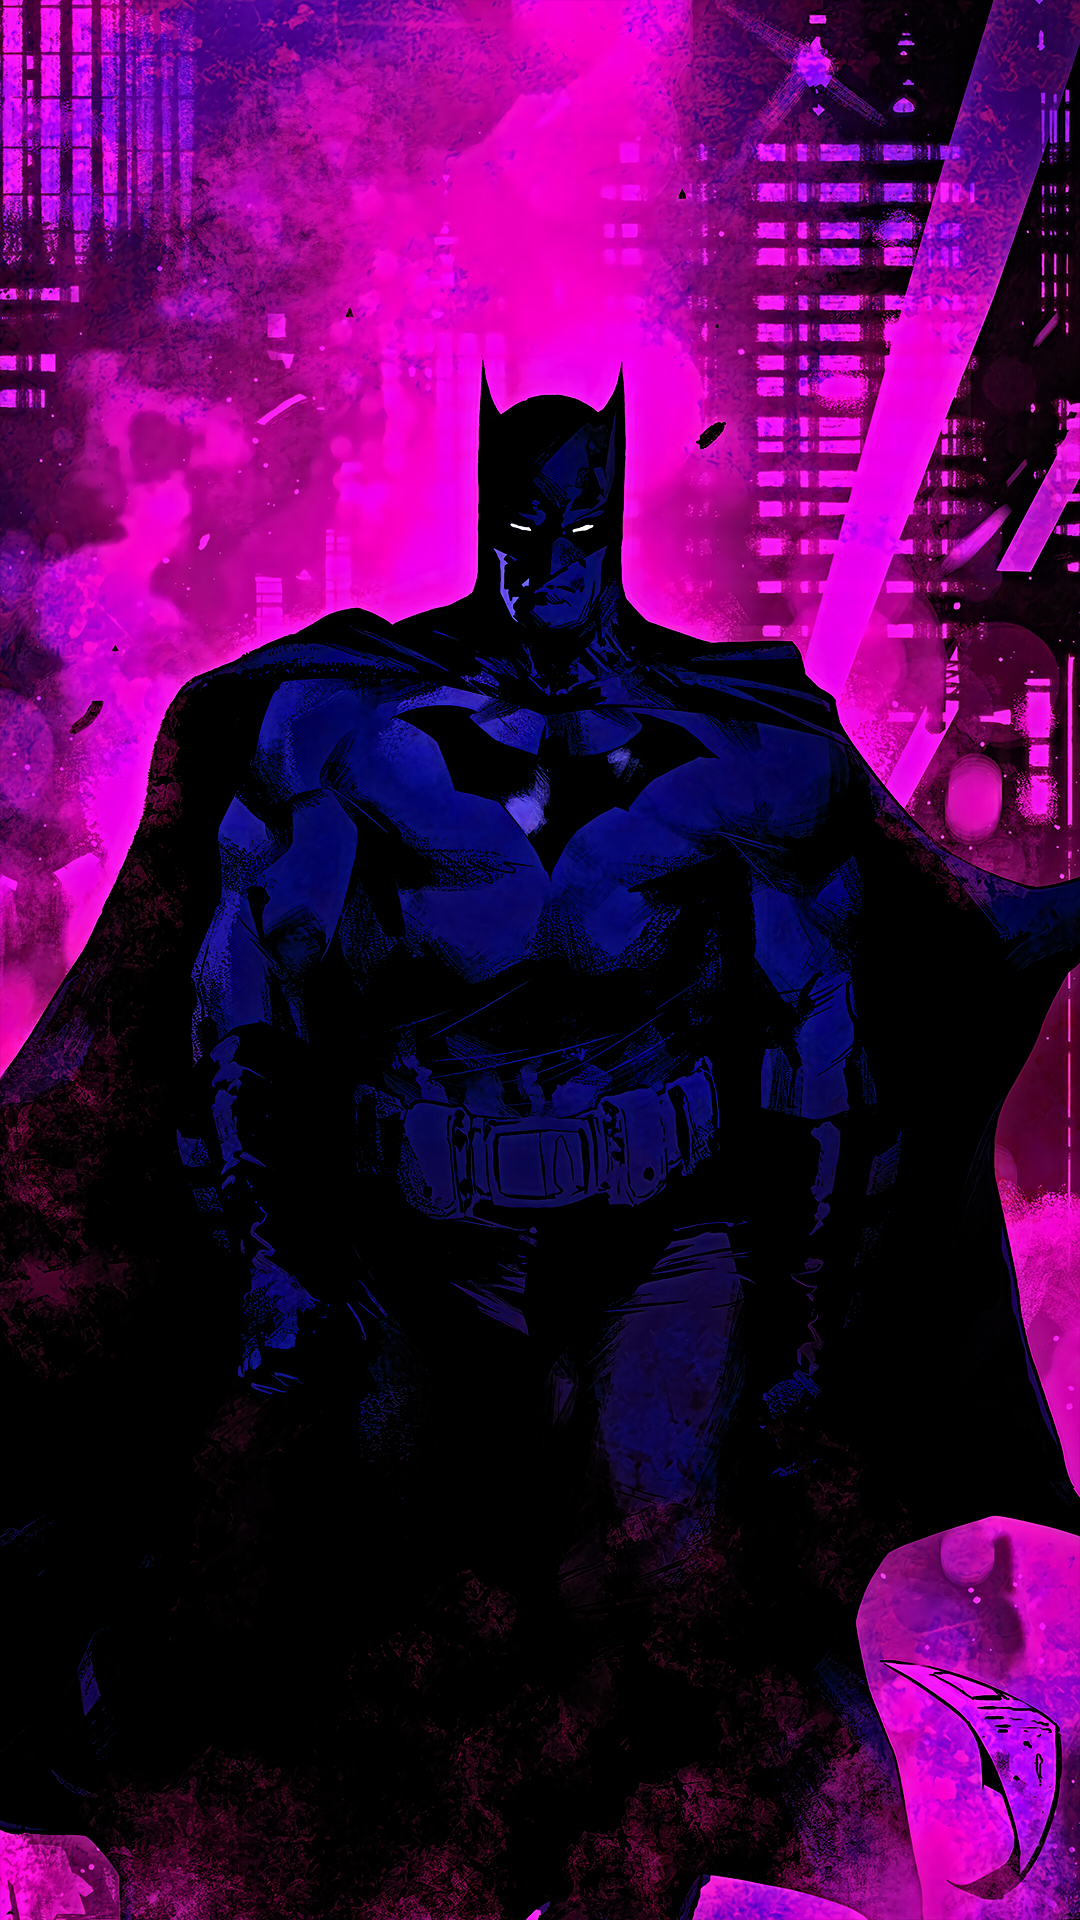 Black Logo Batman wallpapers | Batman wallpaper, The dark knight rises,  Batman